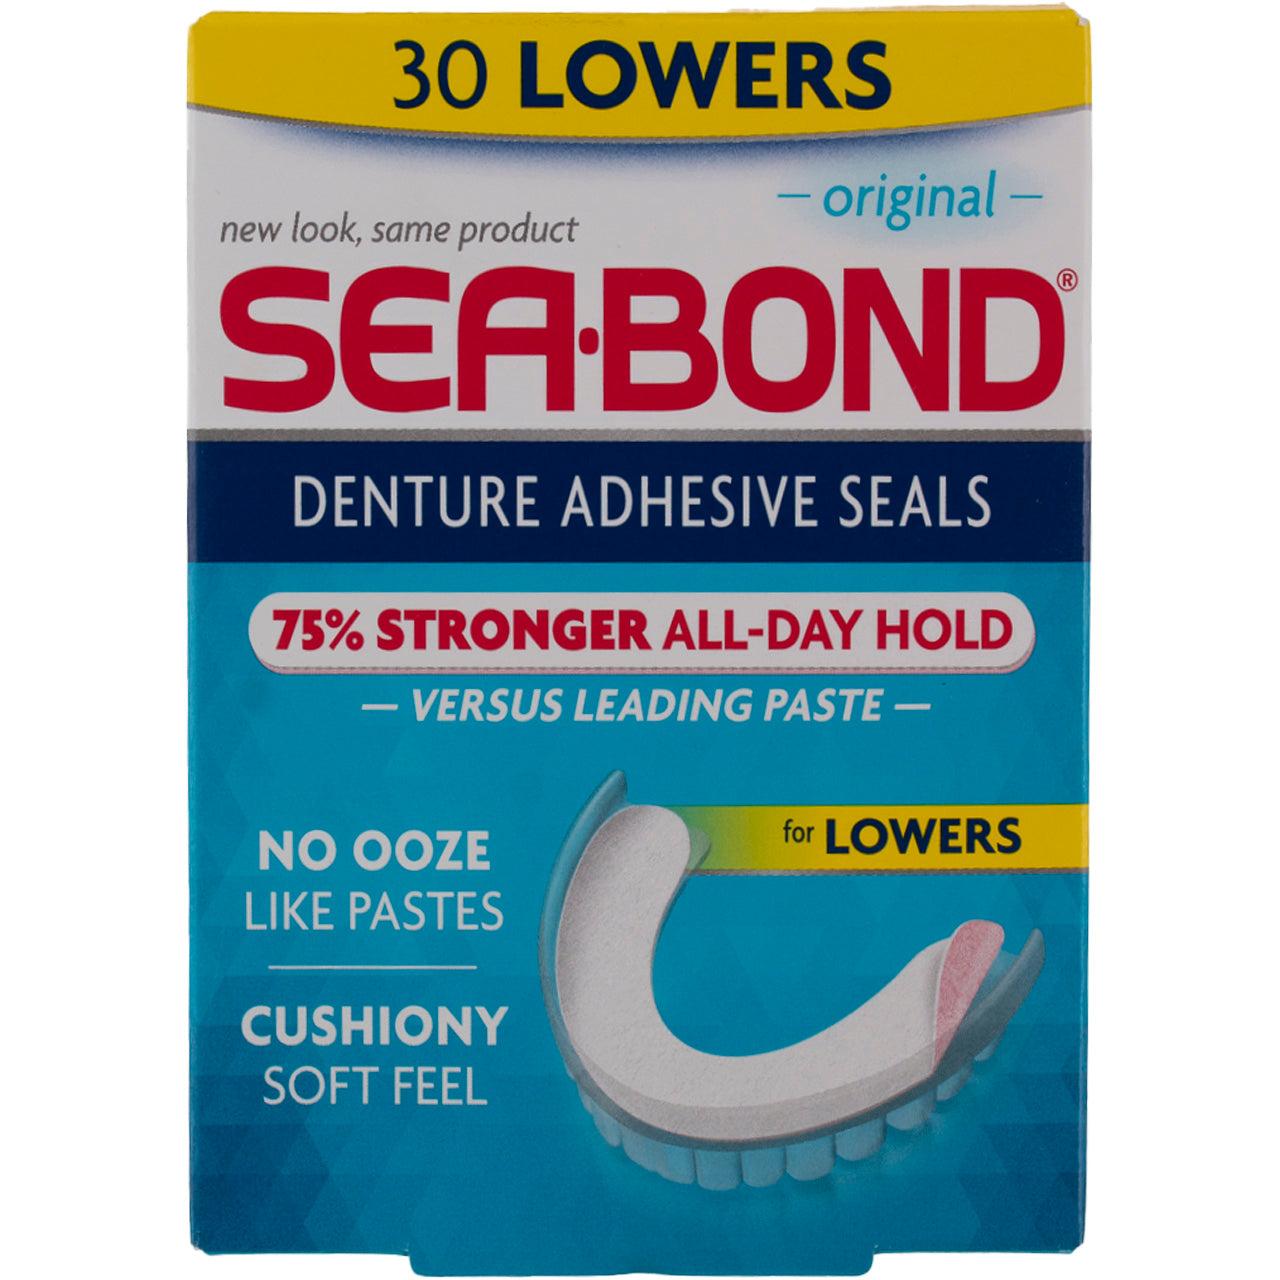 Sea-Bond Triple Action Denture Adhesive Lowers, Original - 15 count